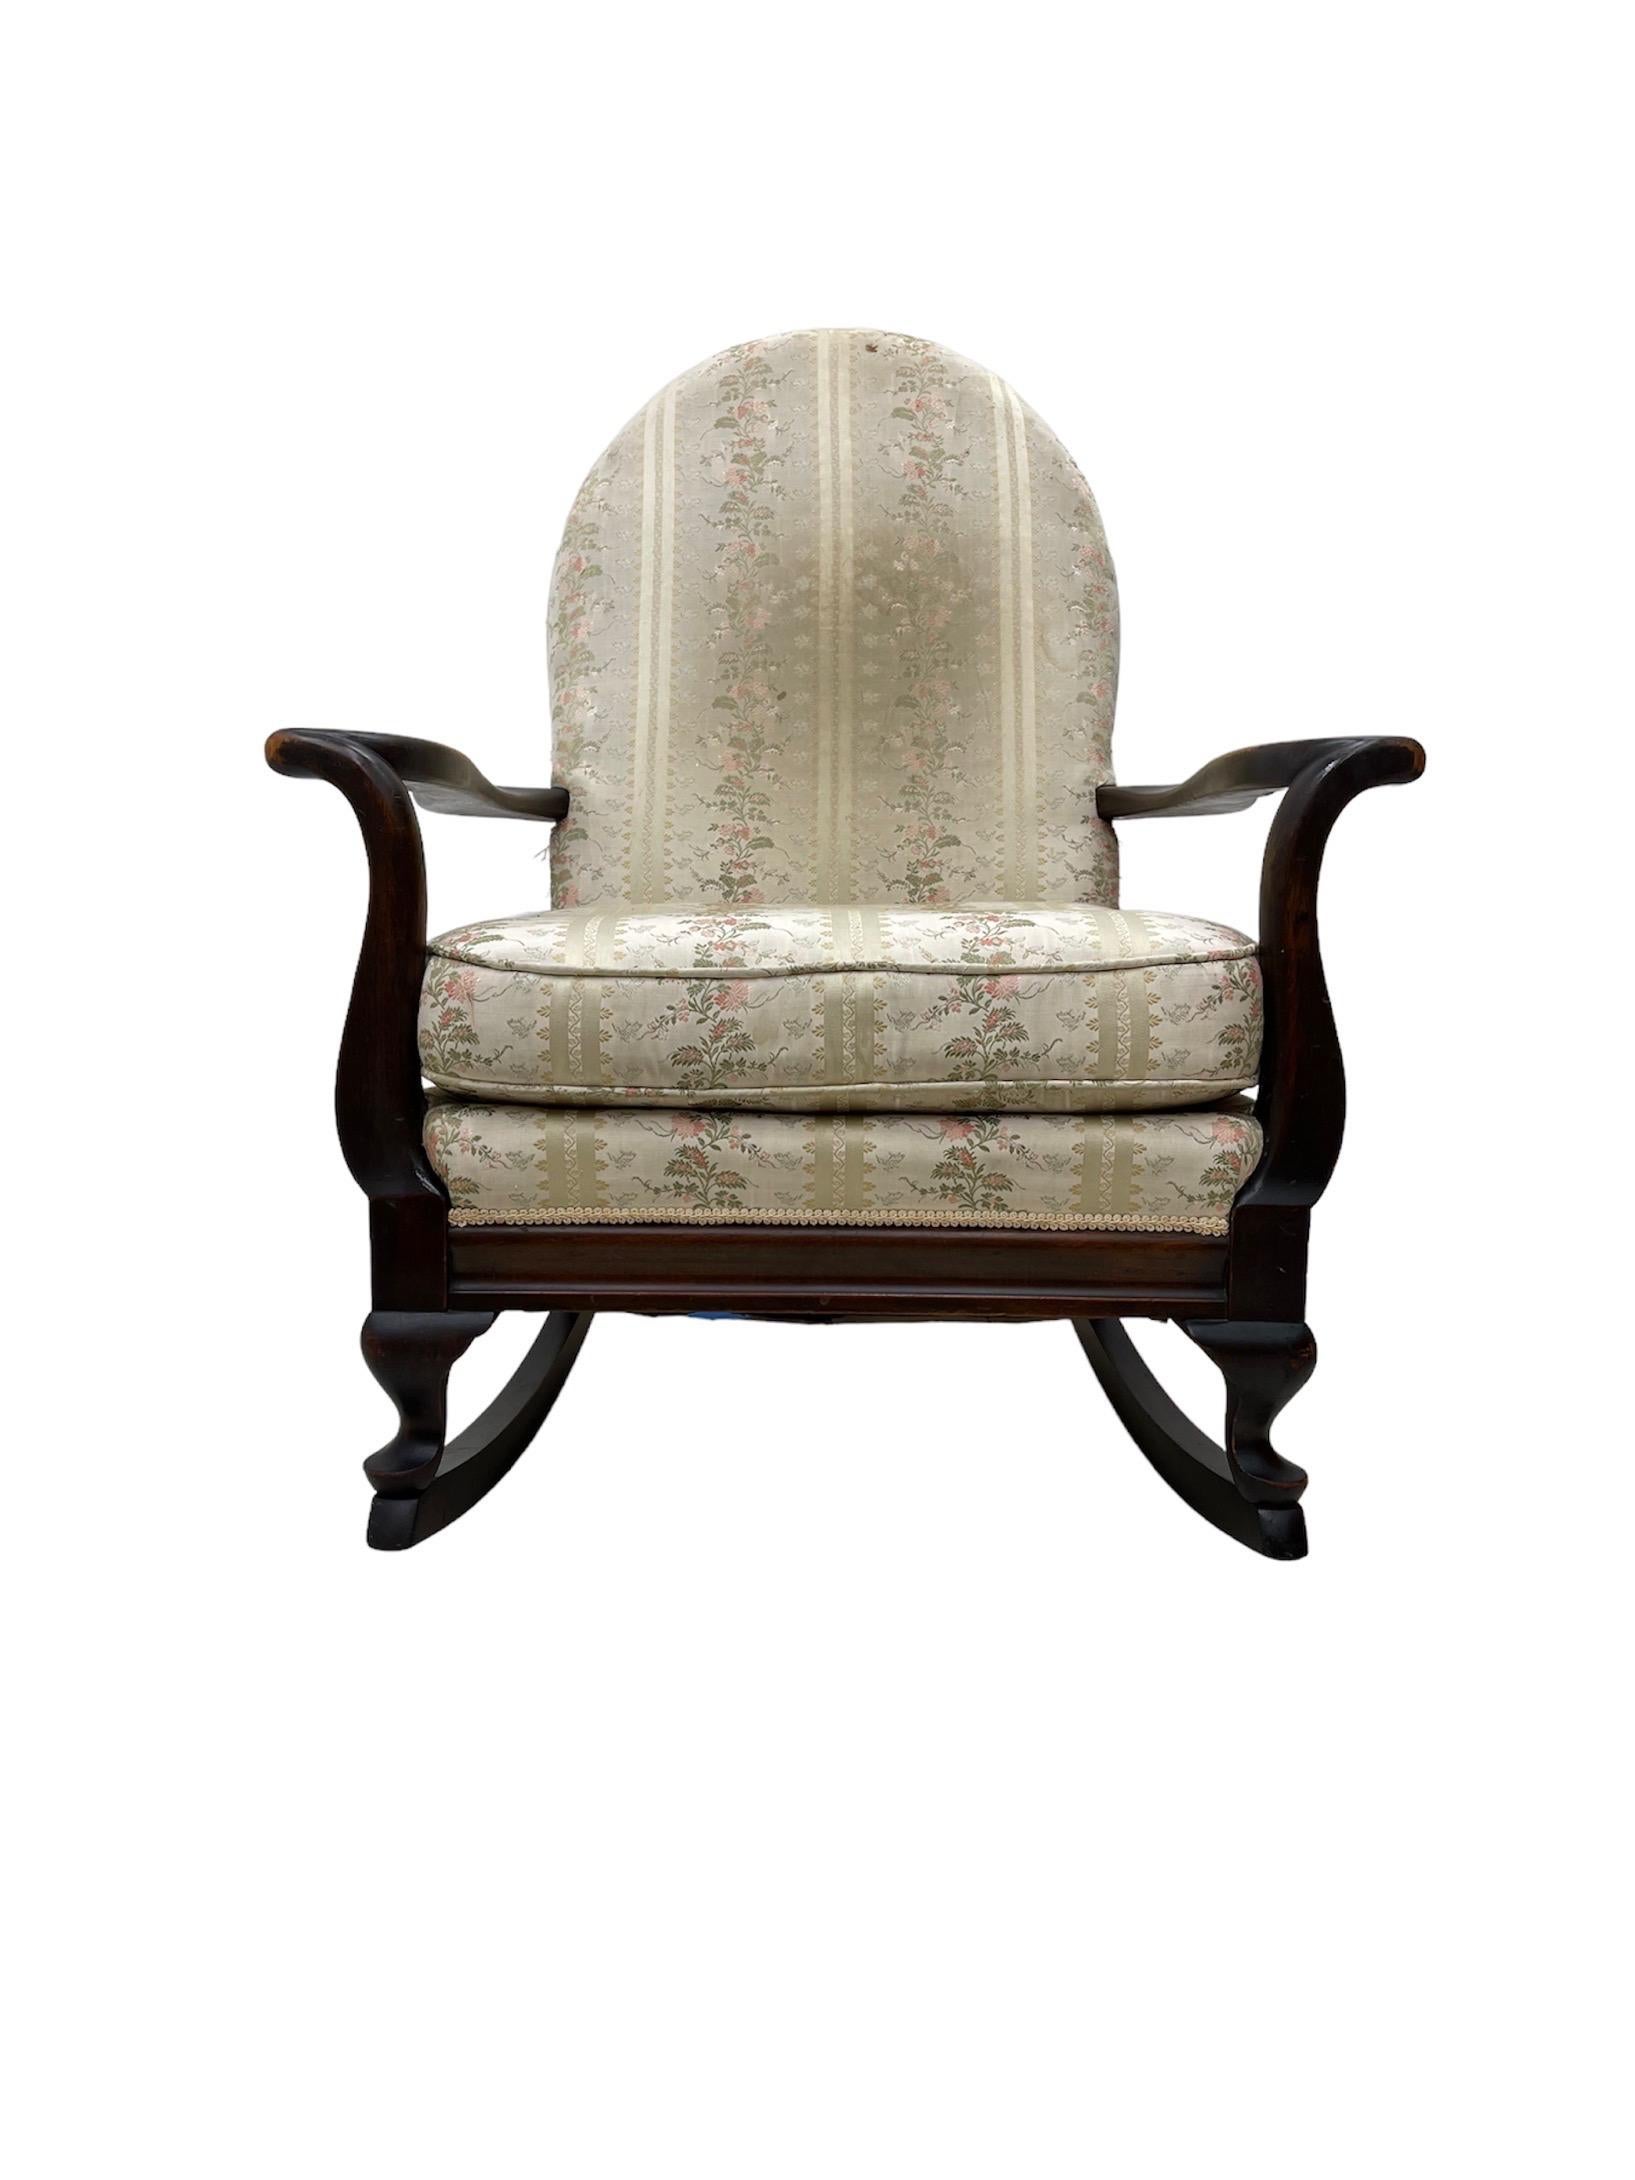 Antique high back rocking chair

Dimensions. 29 W ; 33 D ; 38 1/2 H.